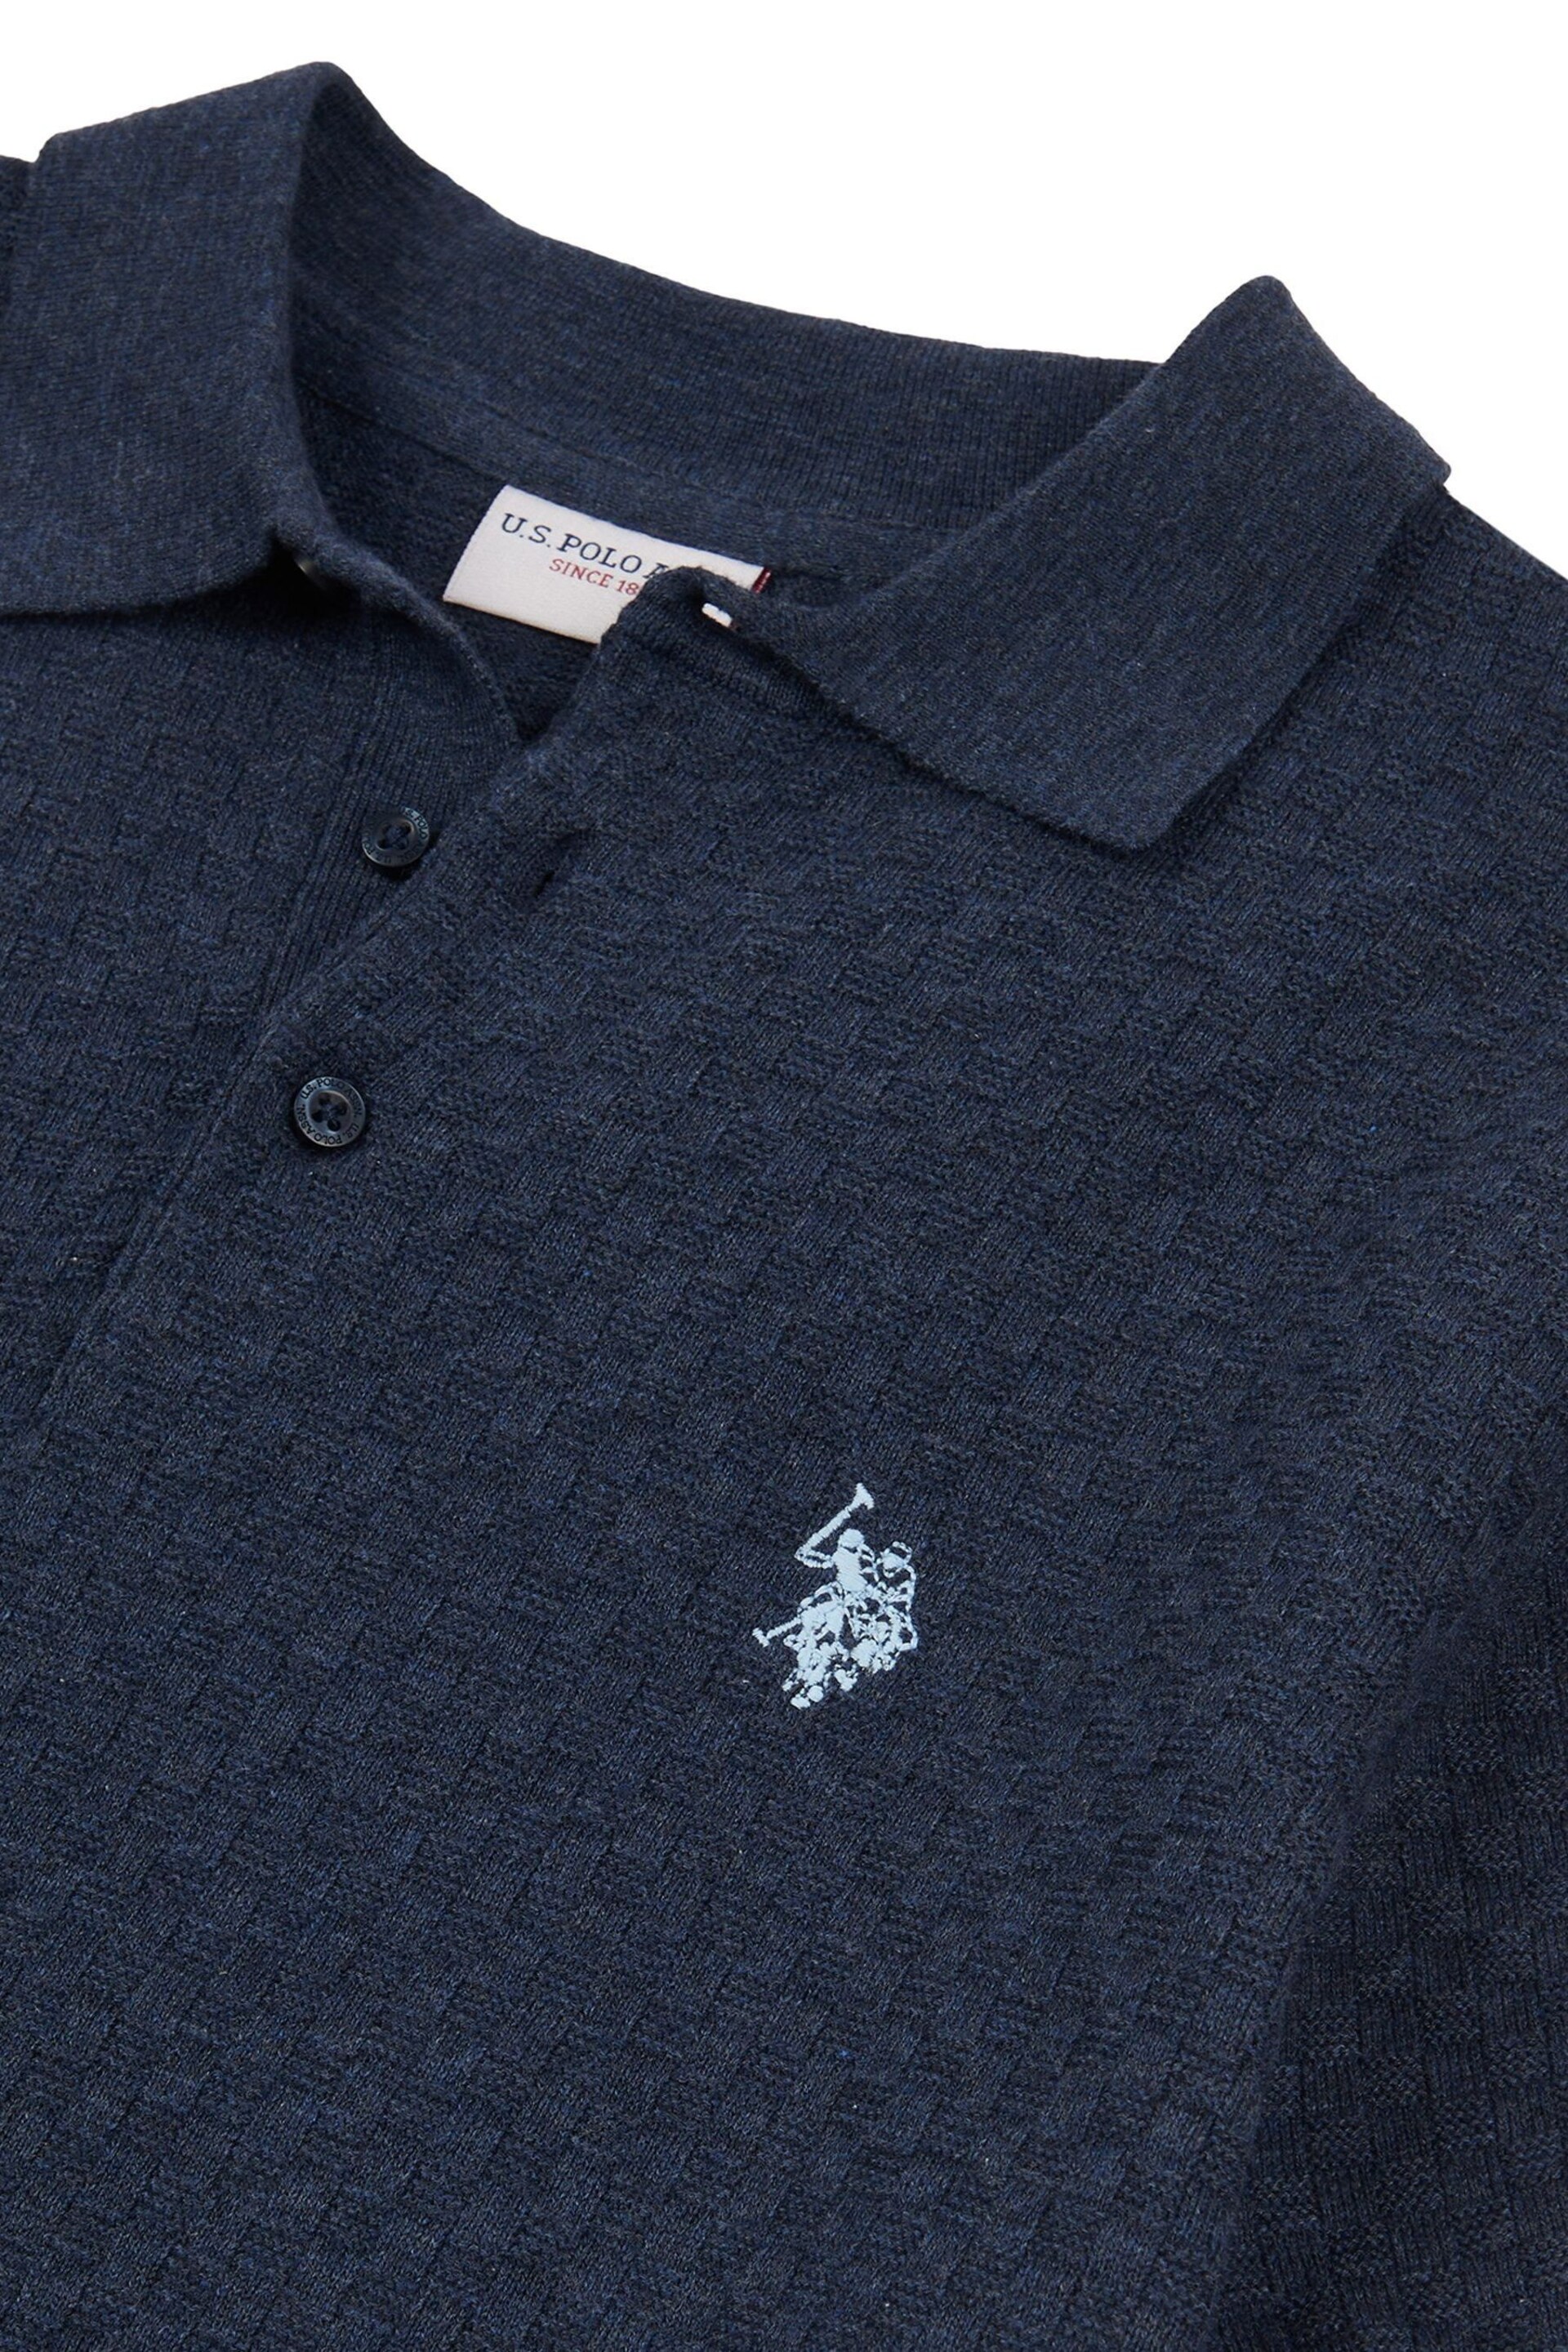 U.S. Polo Assn. Mens Regular Fit Blue Texture Knit Polo Shirt - Image 7 of 7